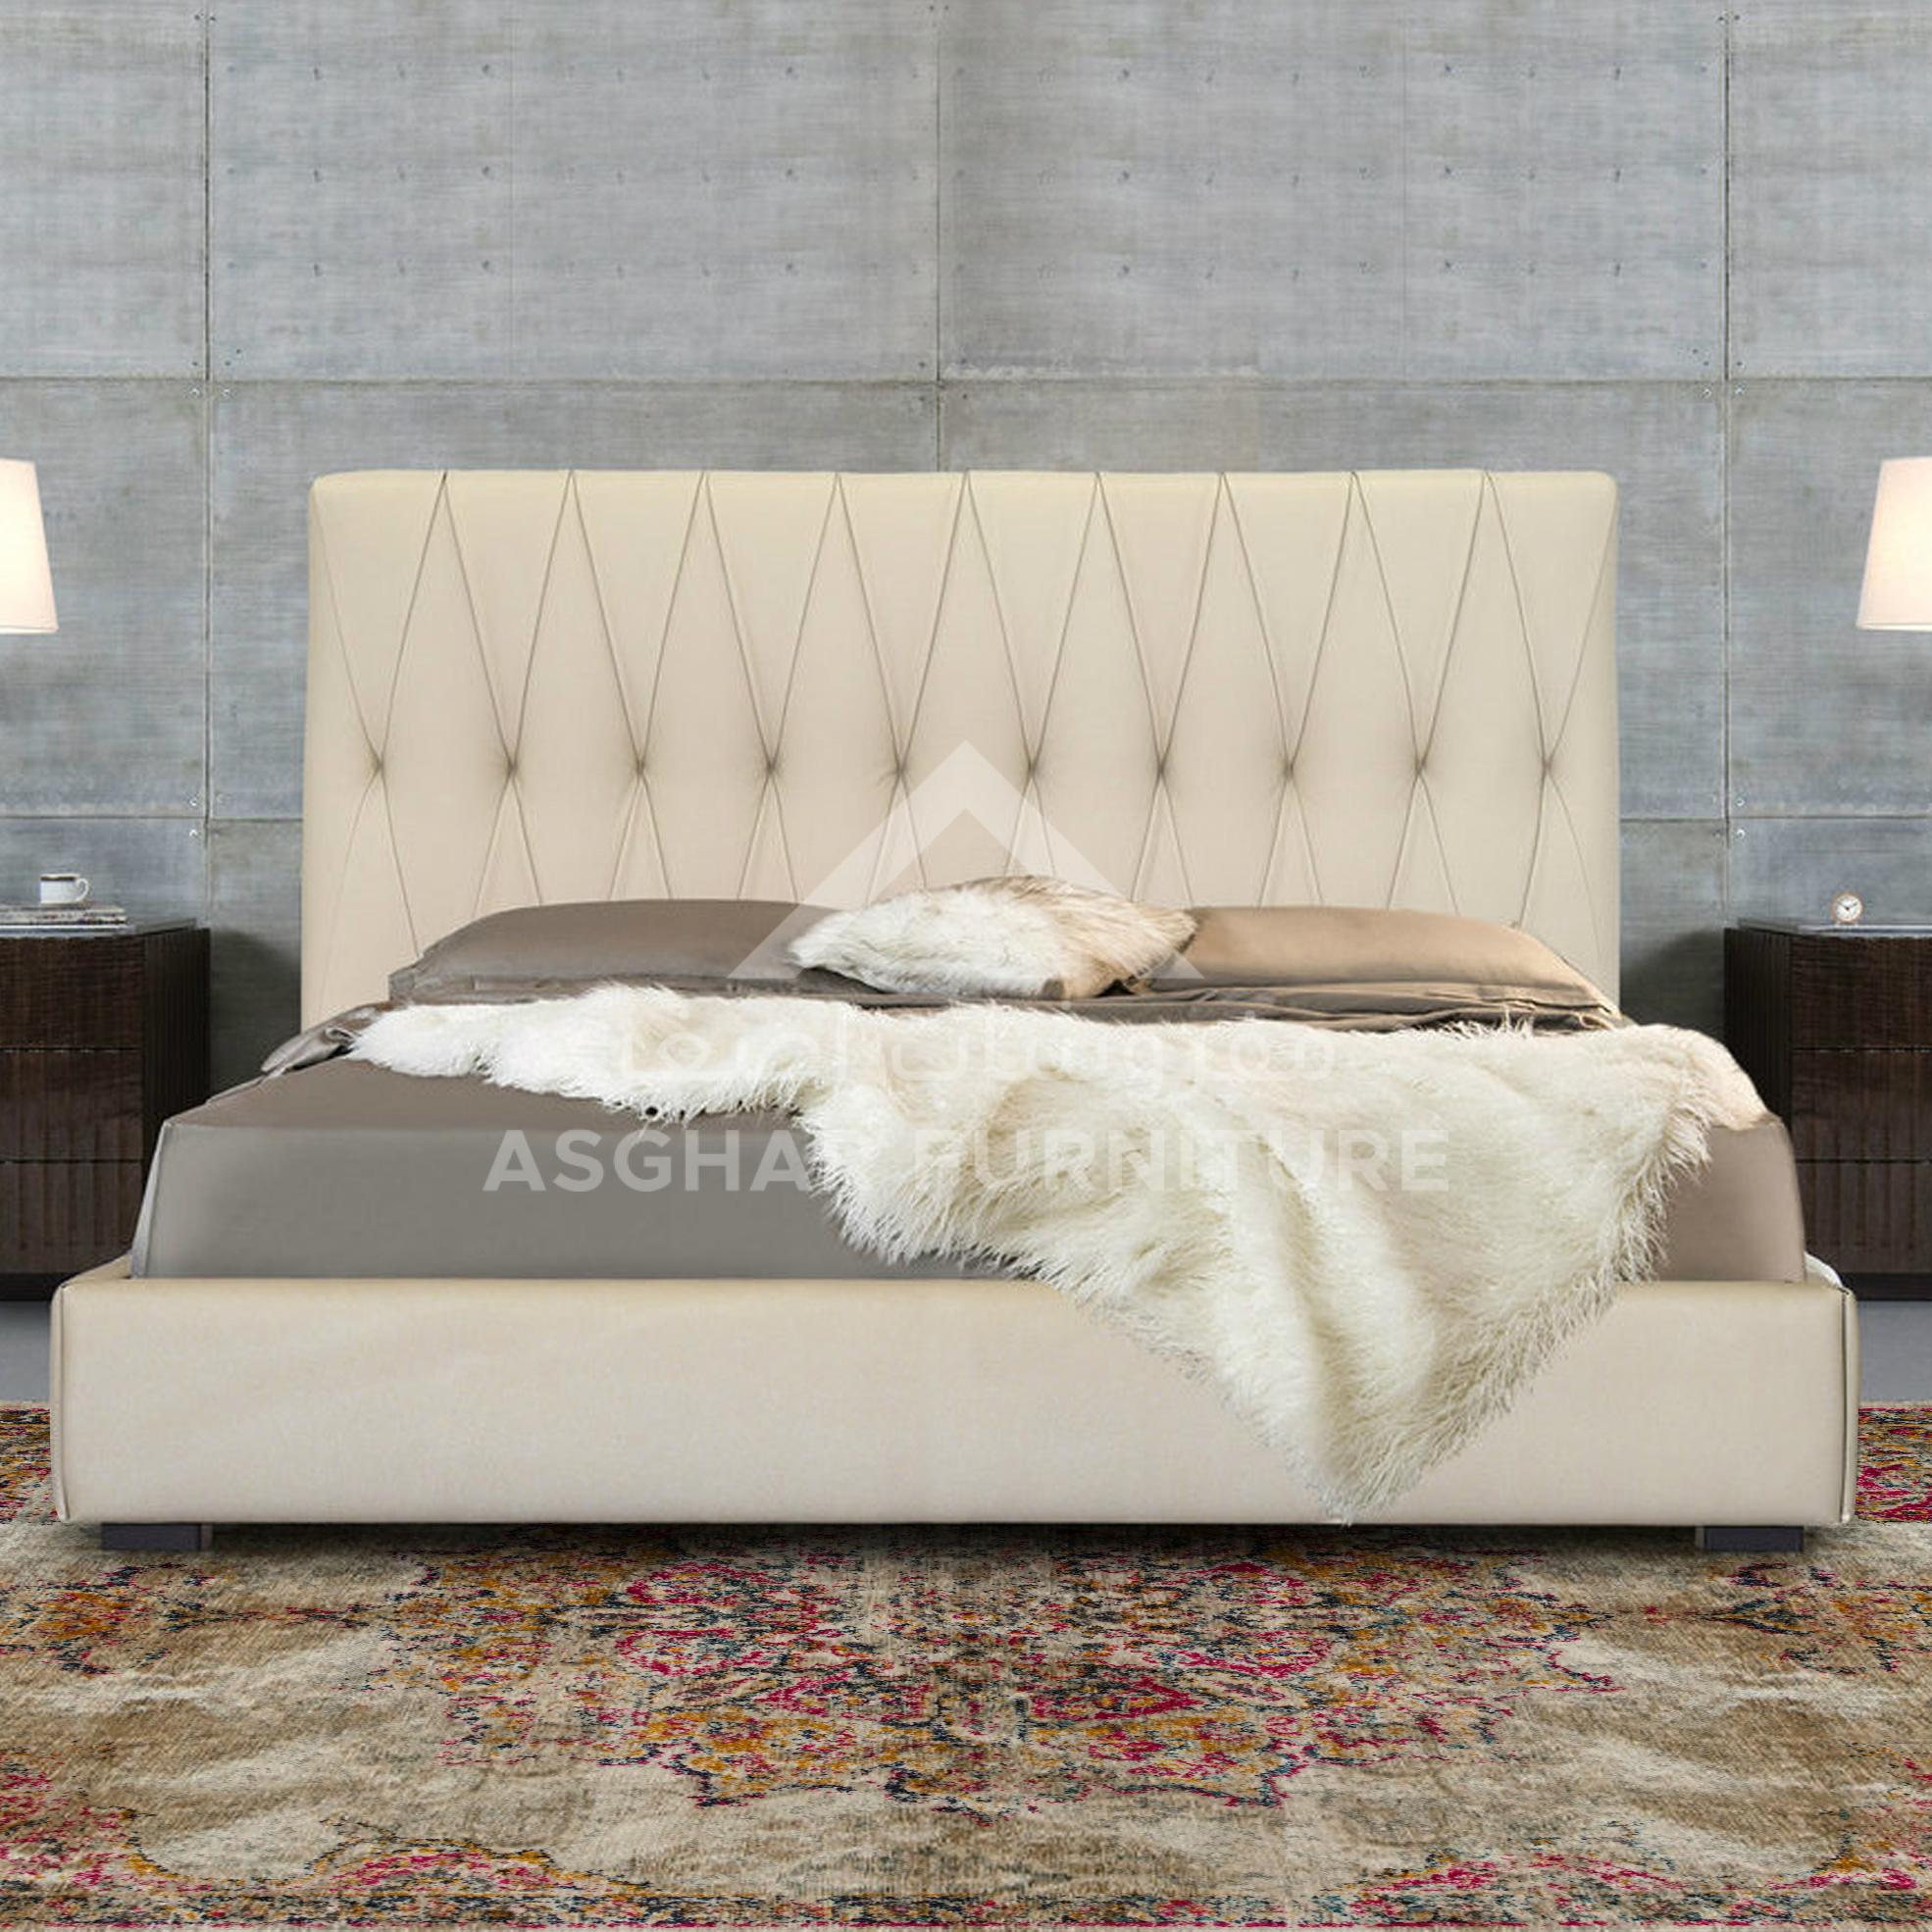 Marlon Knight Bed - Asghar Furniture: Shop Online Home Furniture Across ...